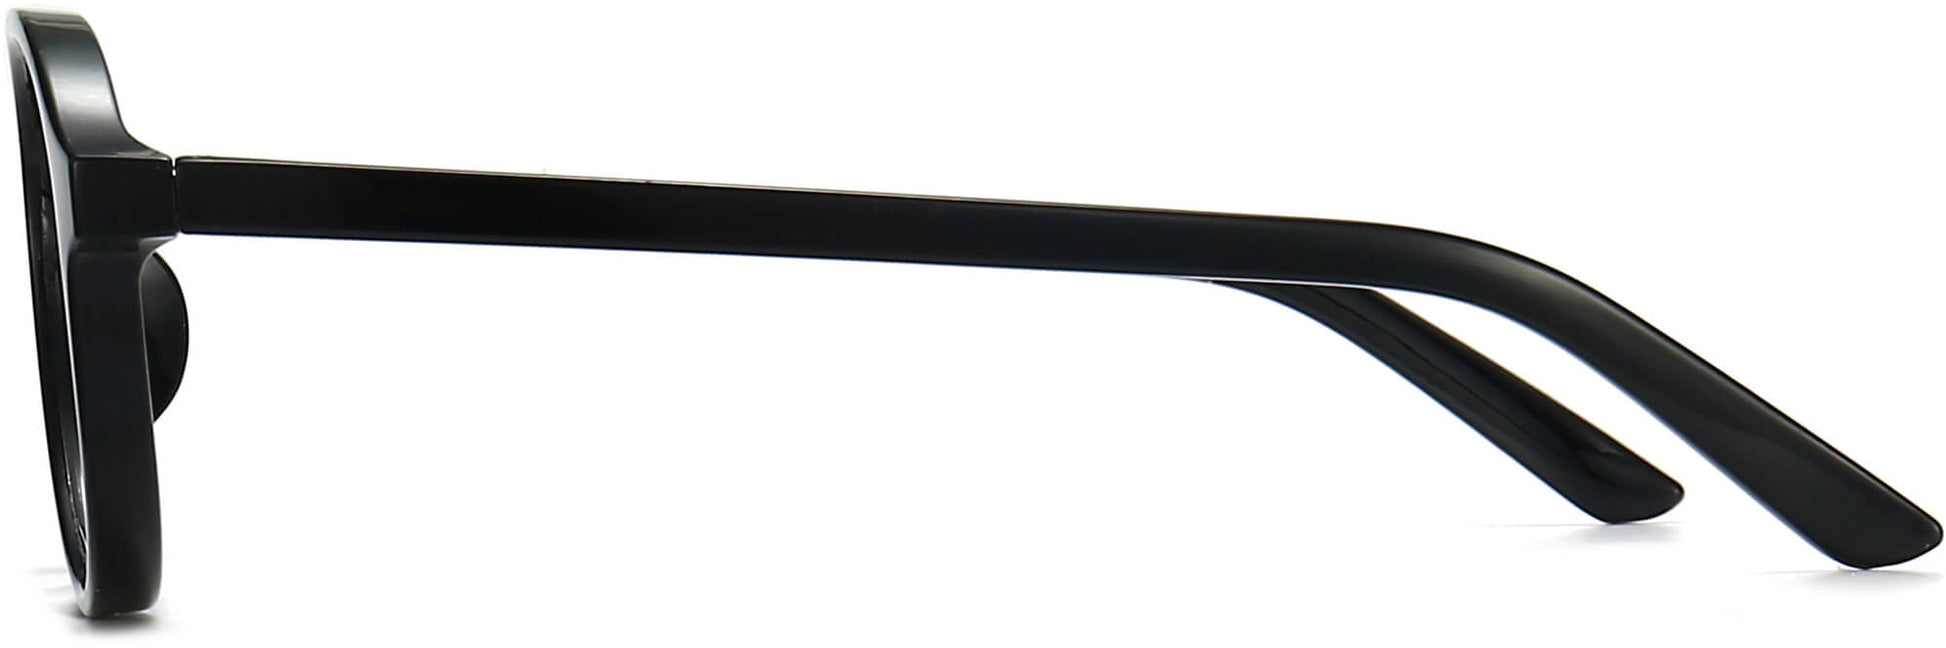 Kylan Aviator Black Eyeglasses from ANRRI, side view